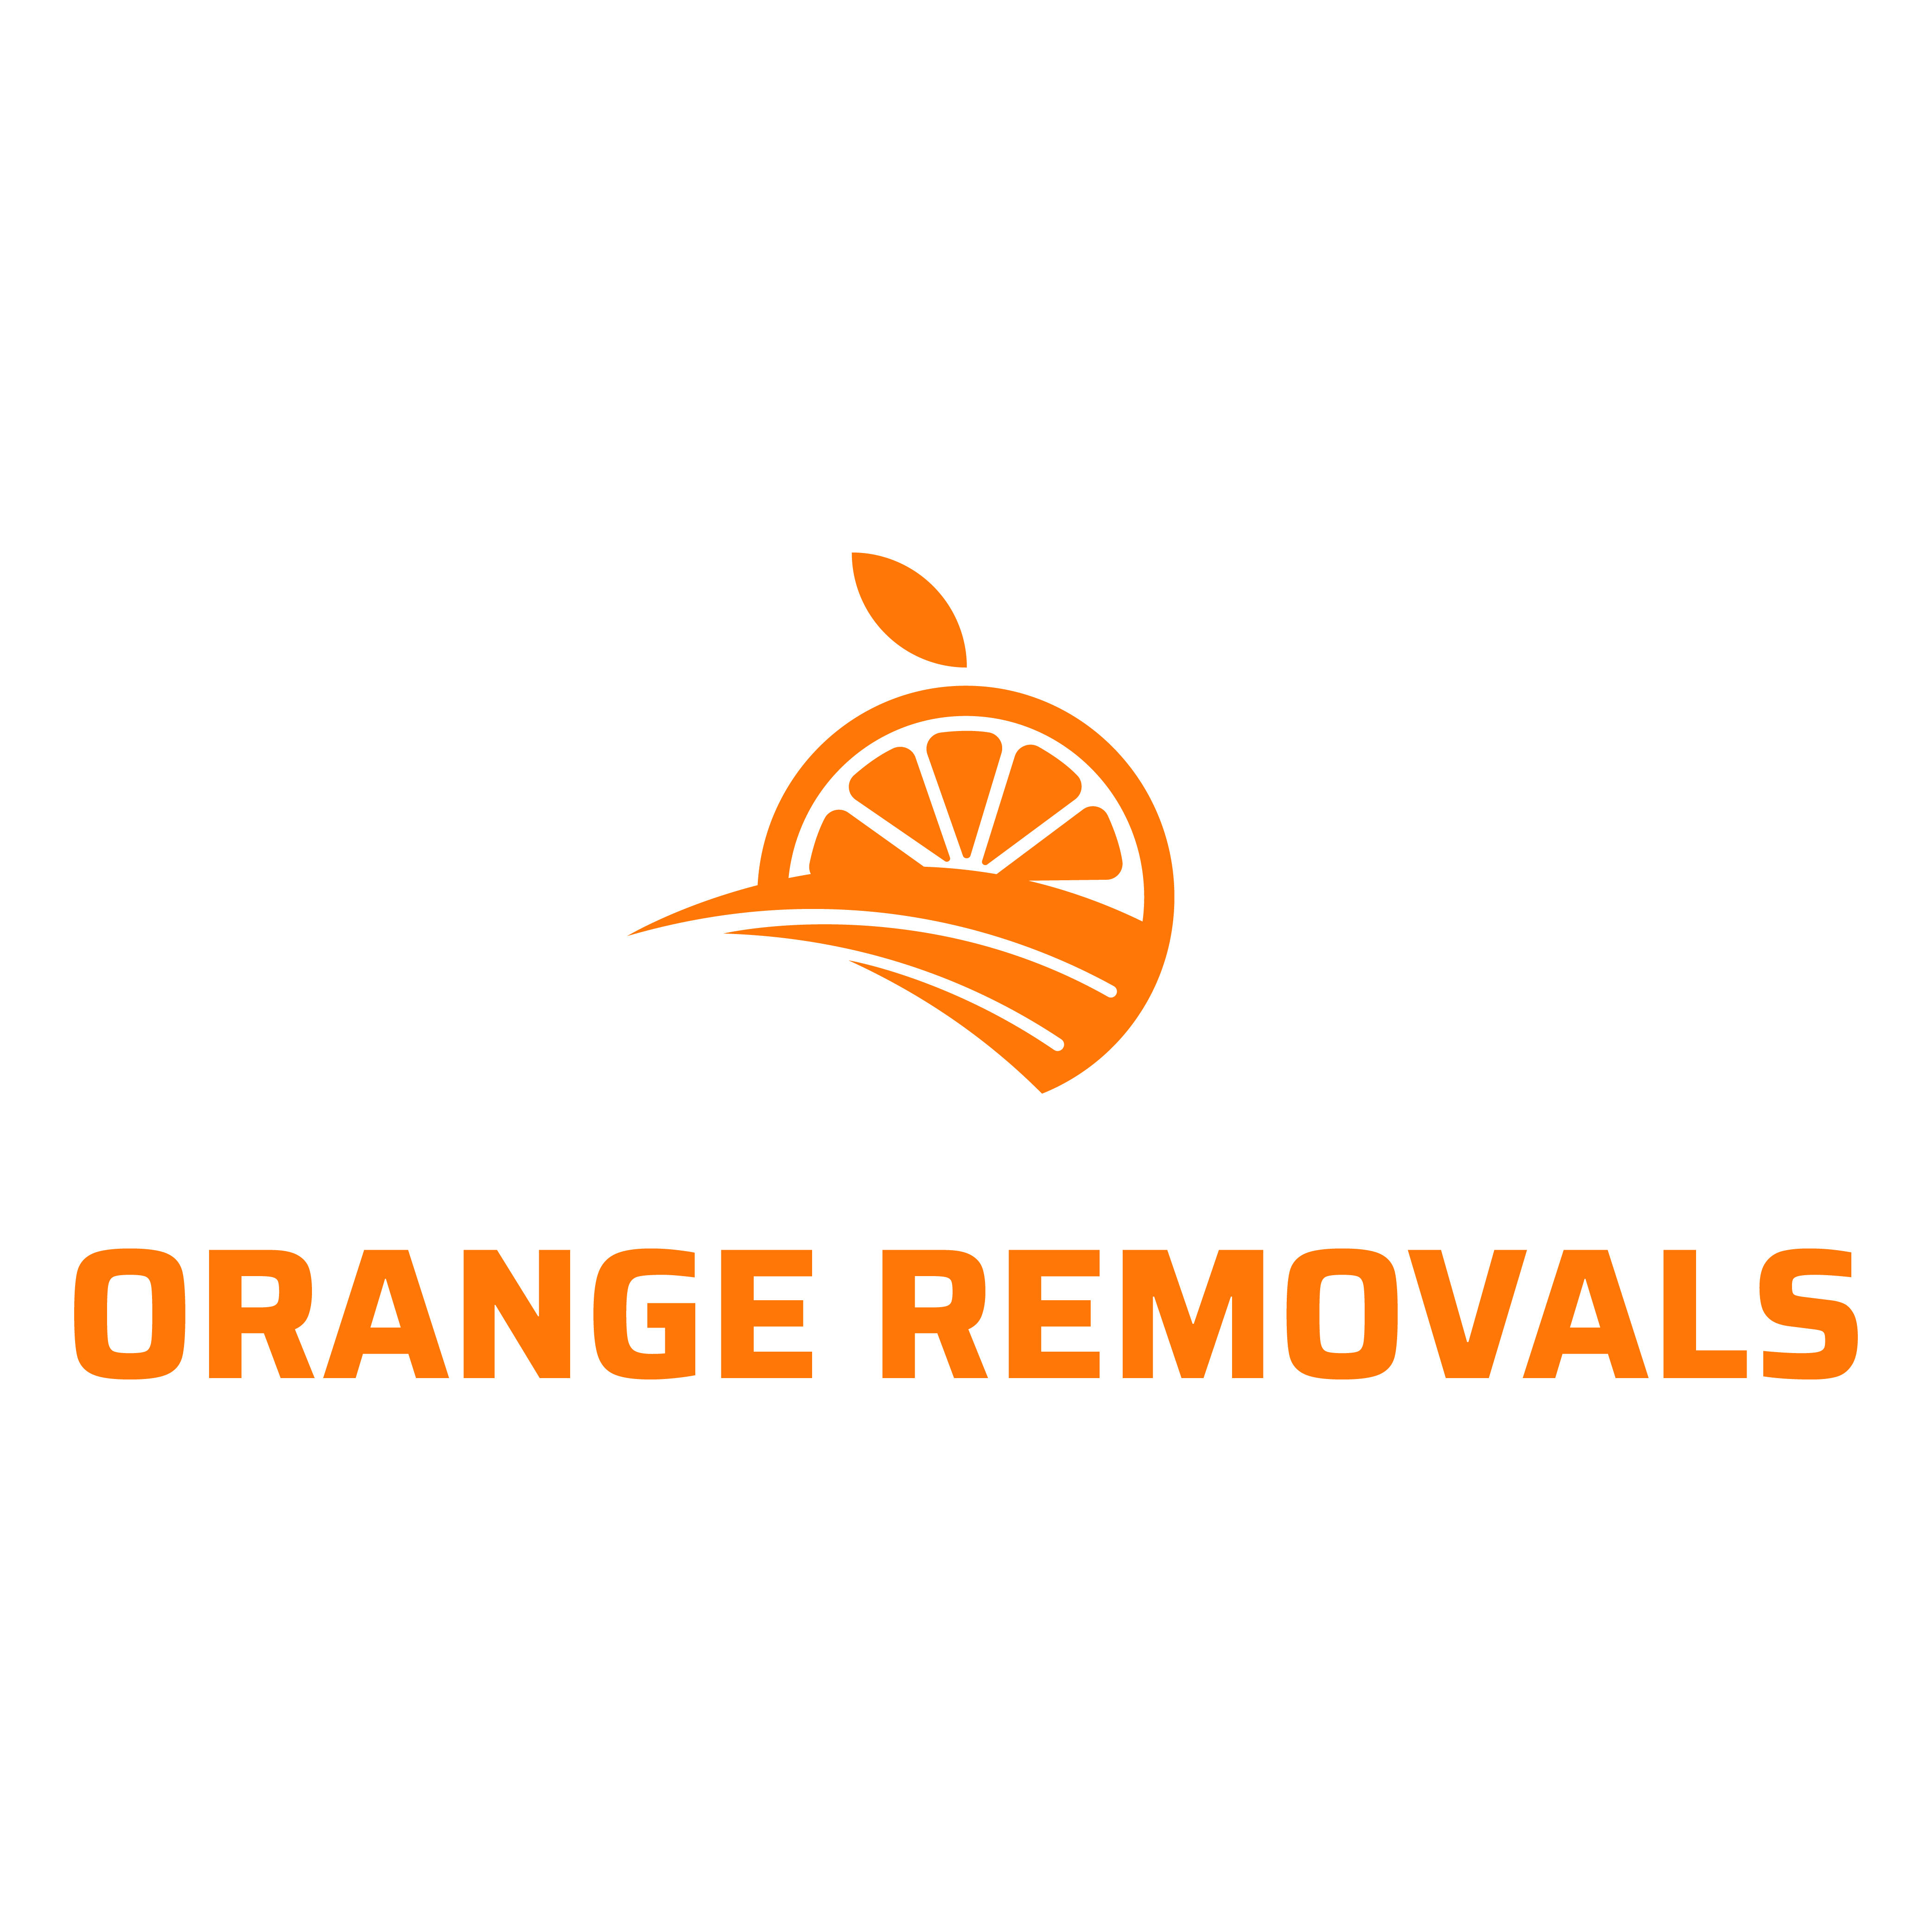 Orange removals logo